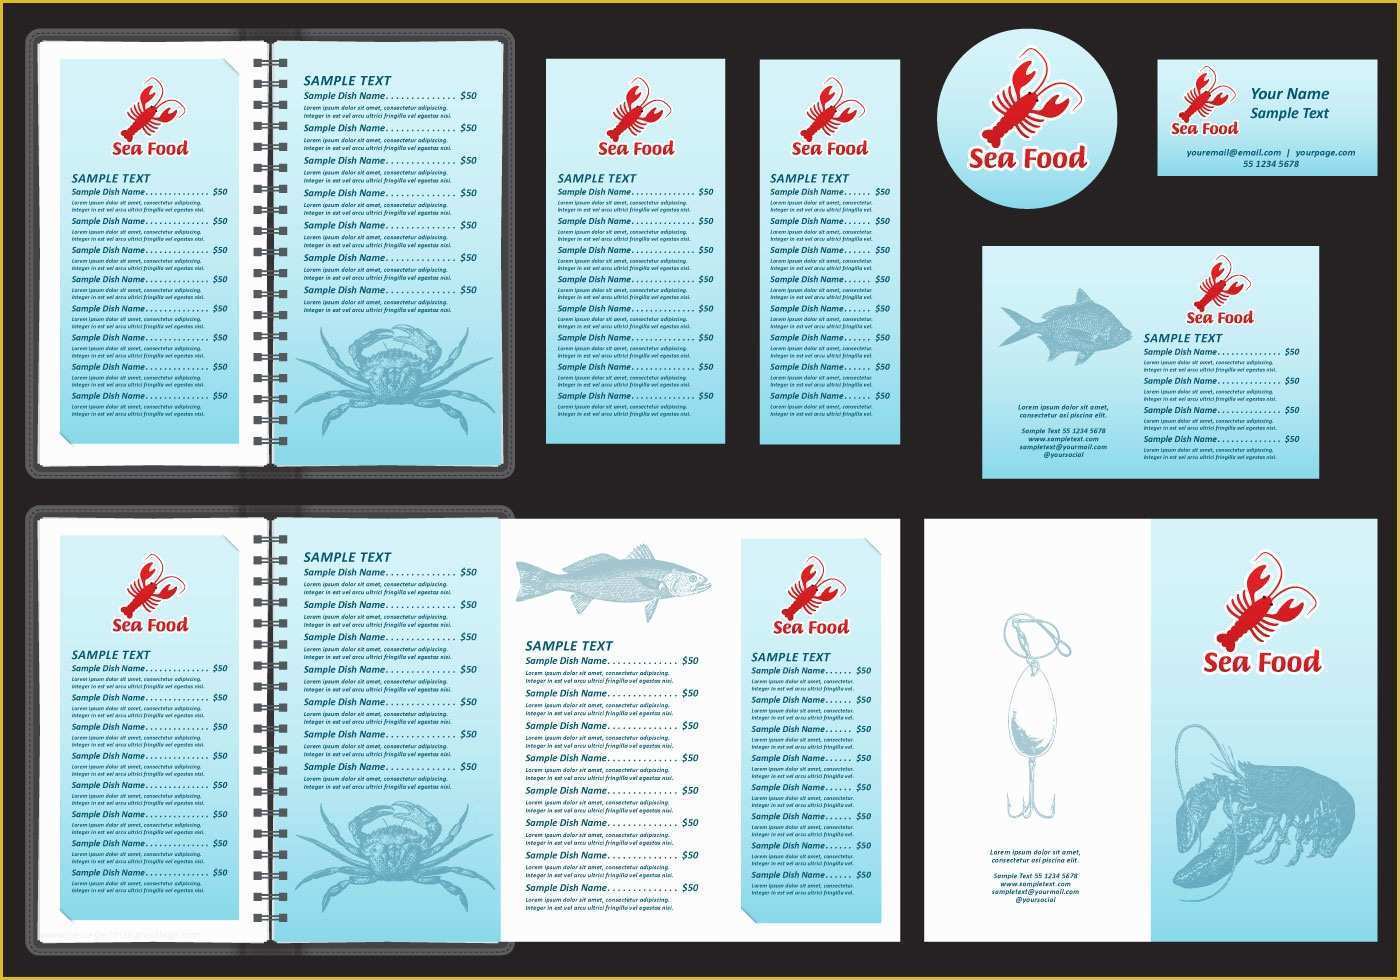 Free Menu Templates Download Of Seafood Menu Templates Download Free Vector Art Stock